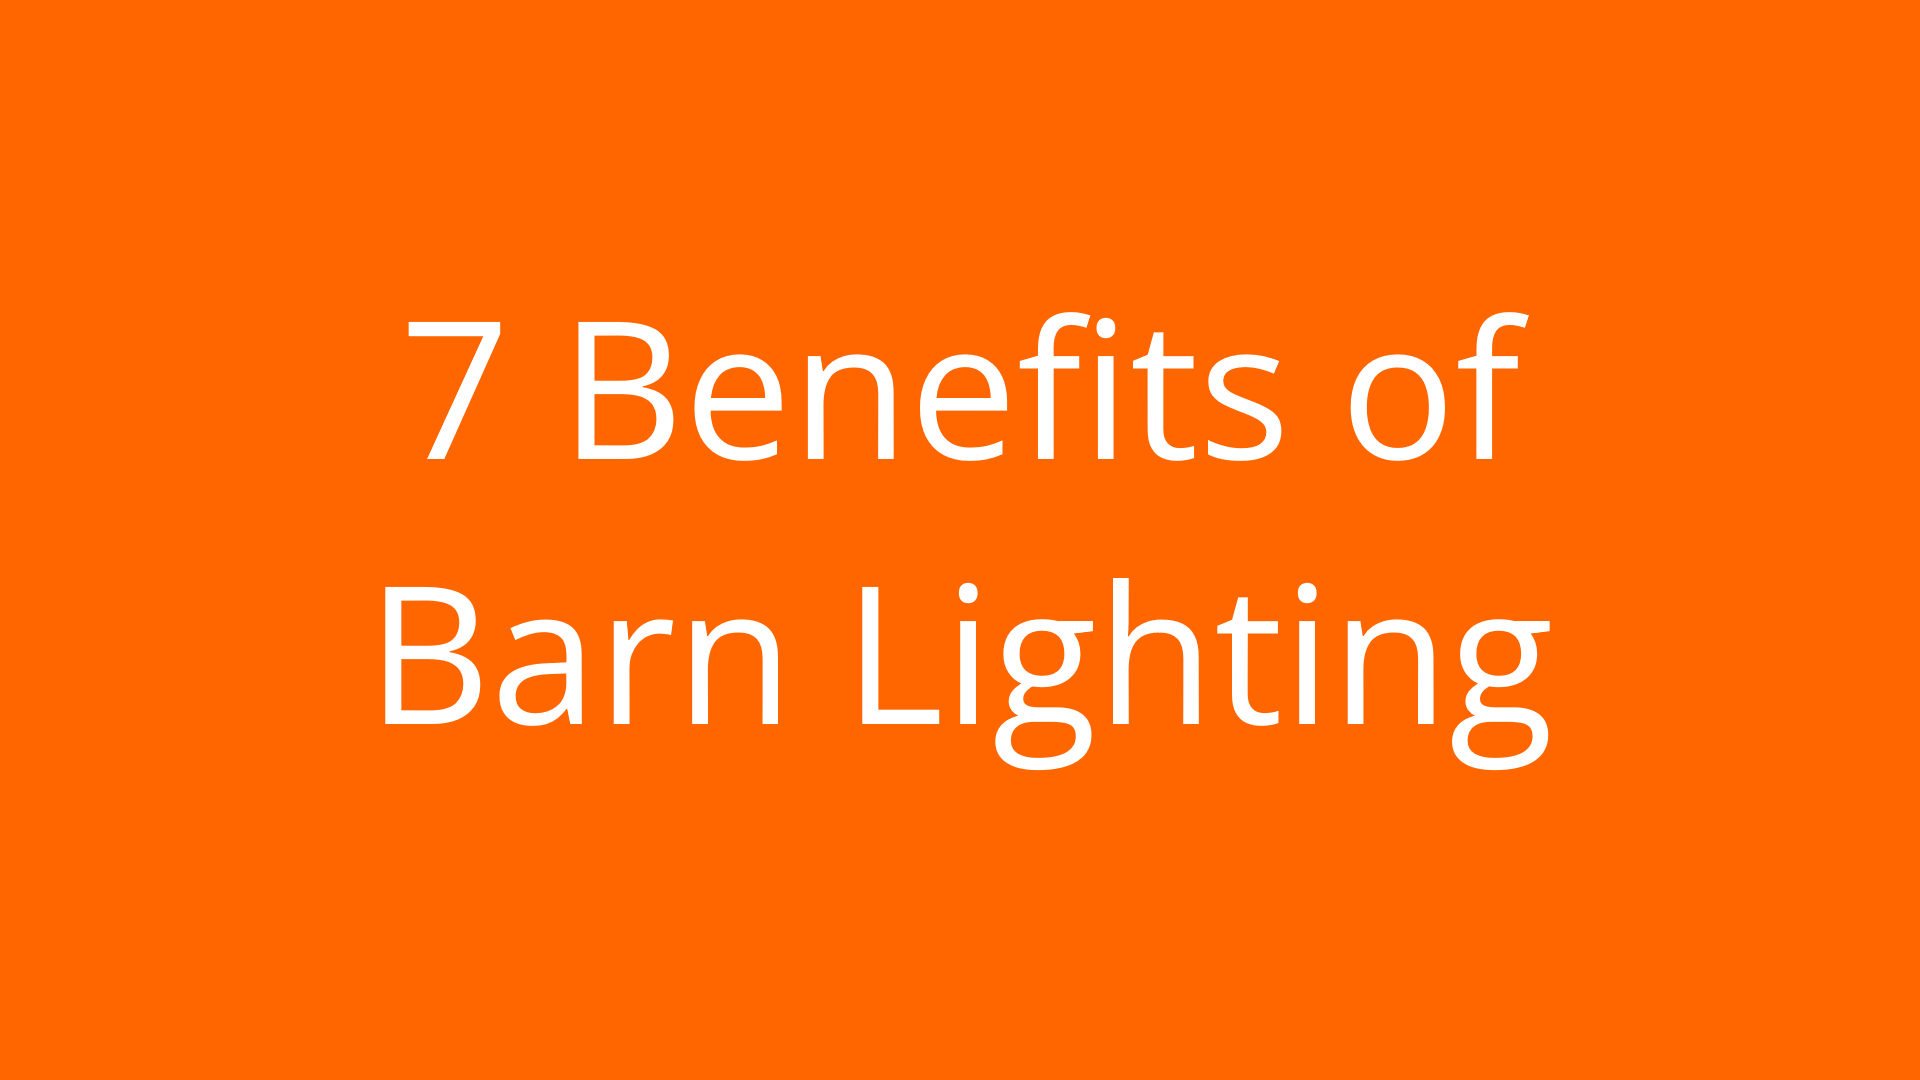 7 Benefits of Barn Lighting